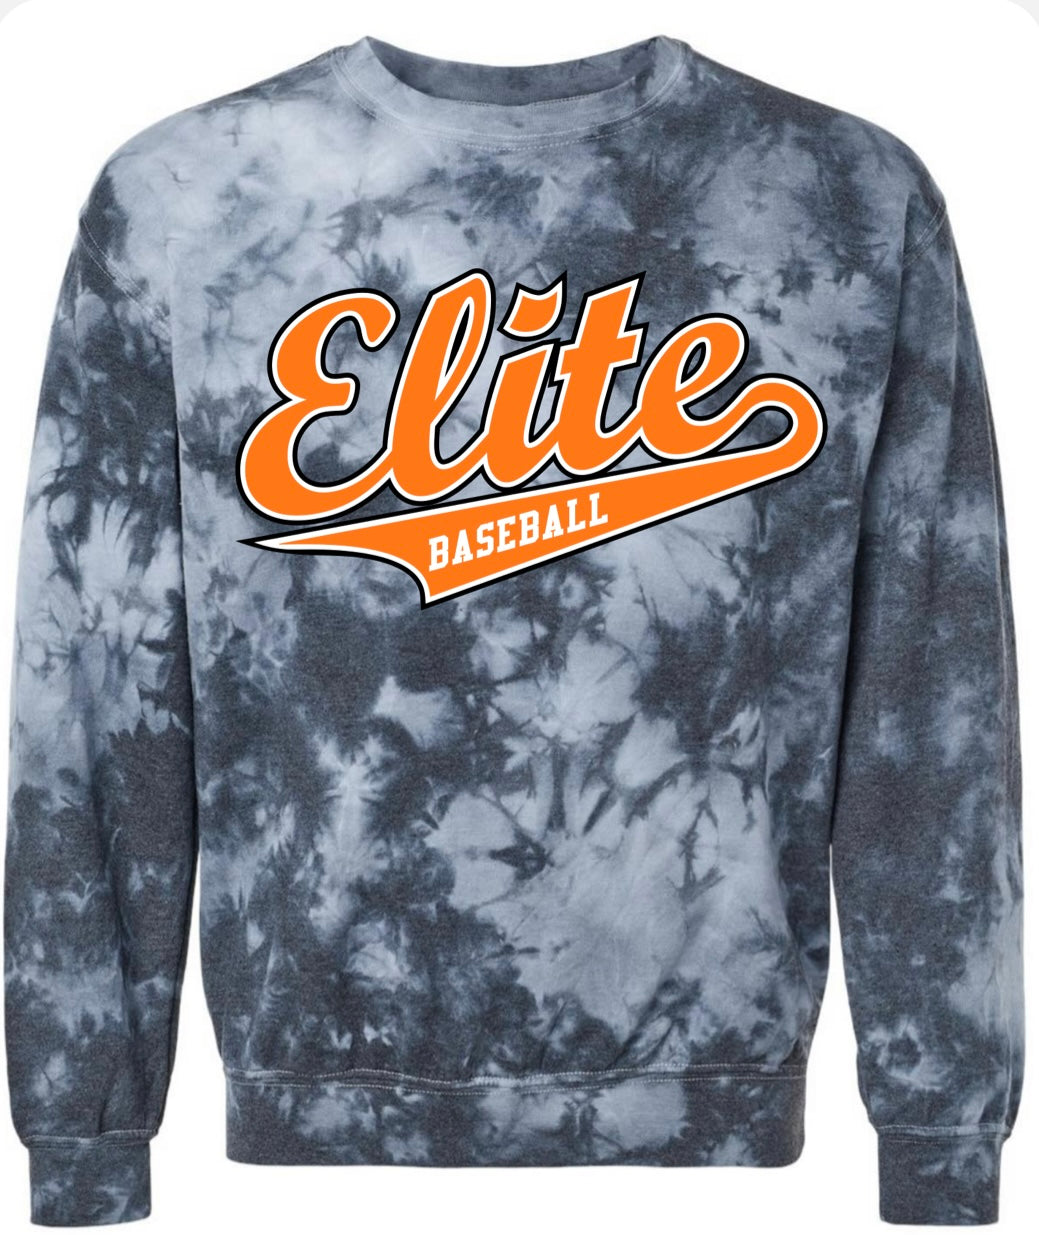 **Limited Edition** Elite Baseball Tie Dye Sweatshirt